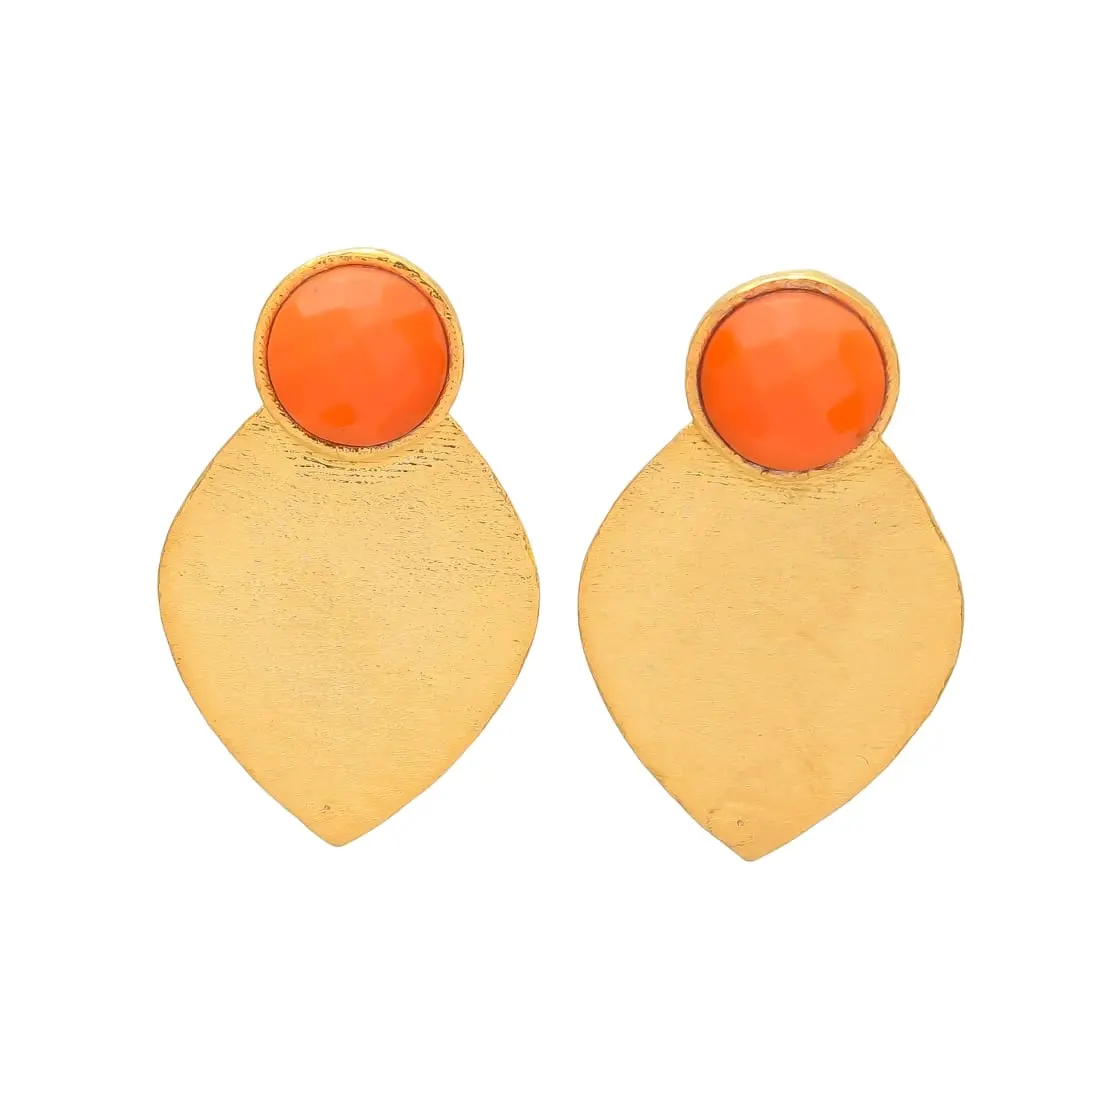 Red stone embedded Earrings 18kt yellow gold chandelier earrings emulate the delicate form a leaf drop design earrings